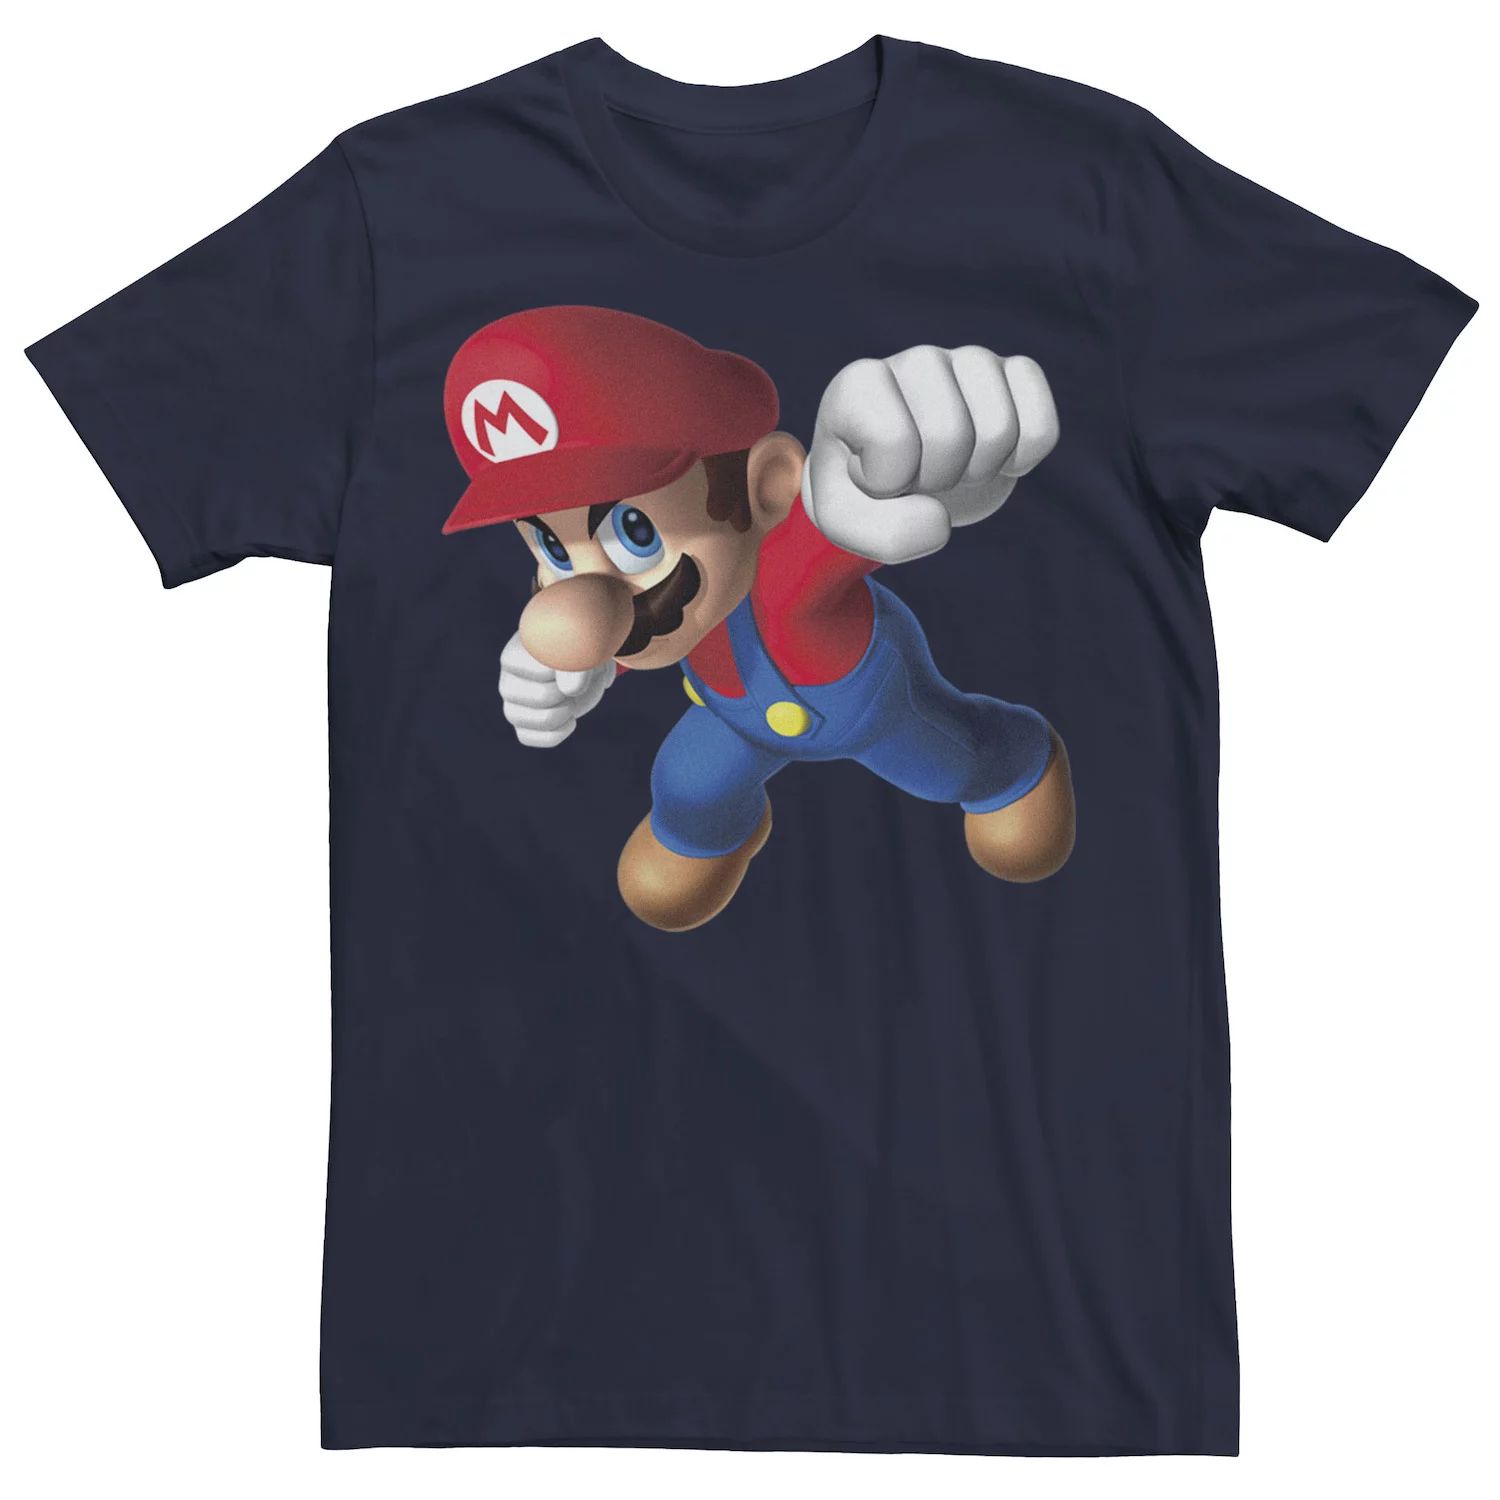 Мужская футболка с портретом Nintendo Mario Licensed Character фото